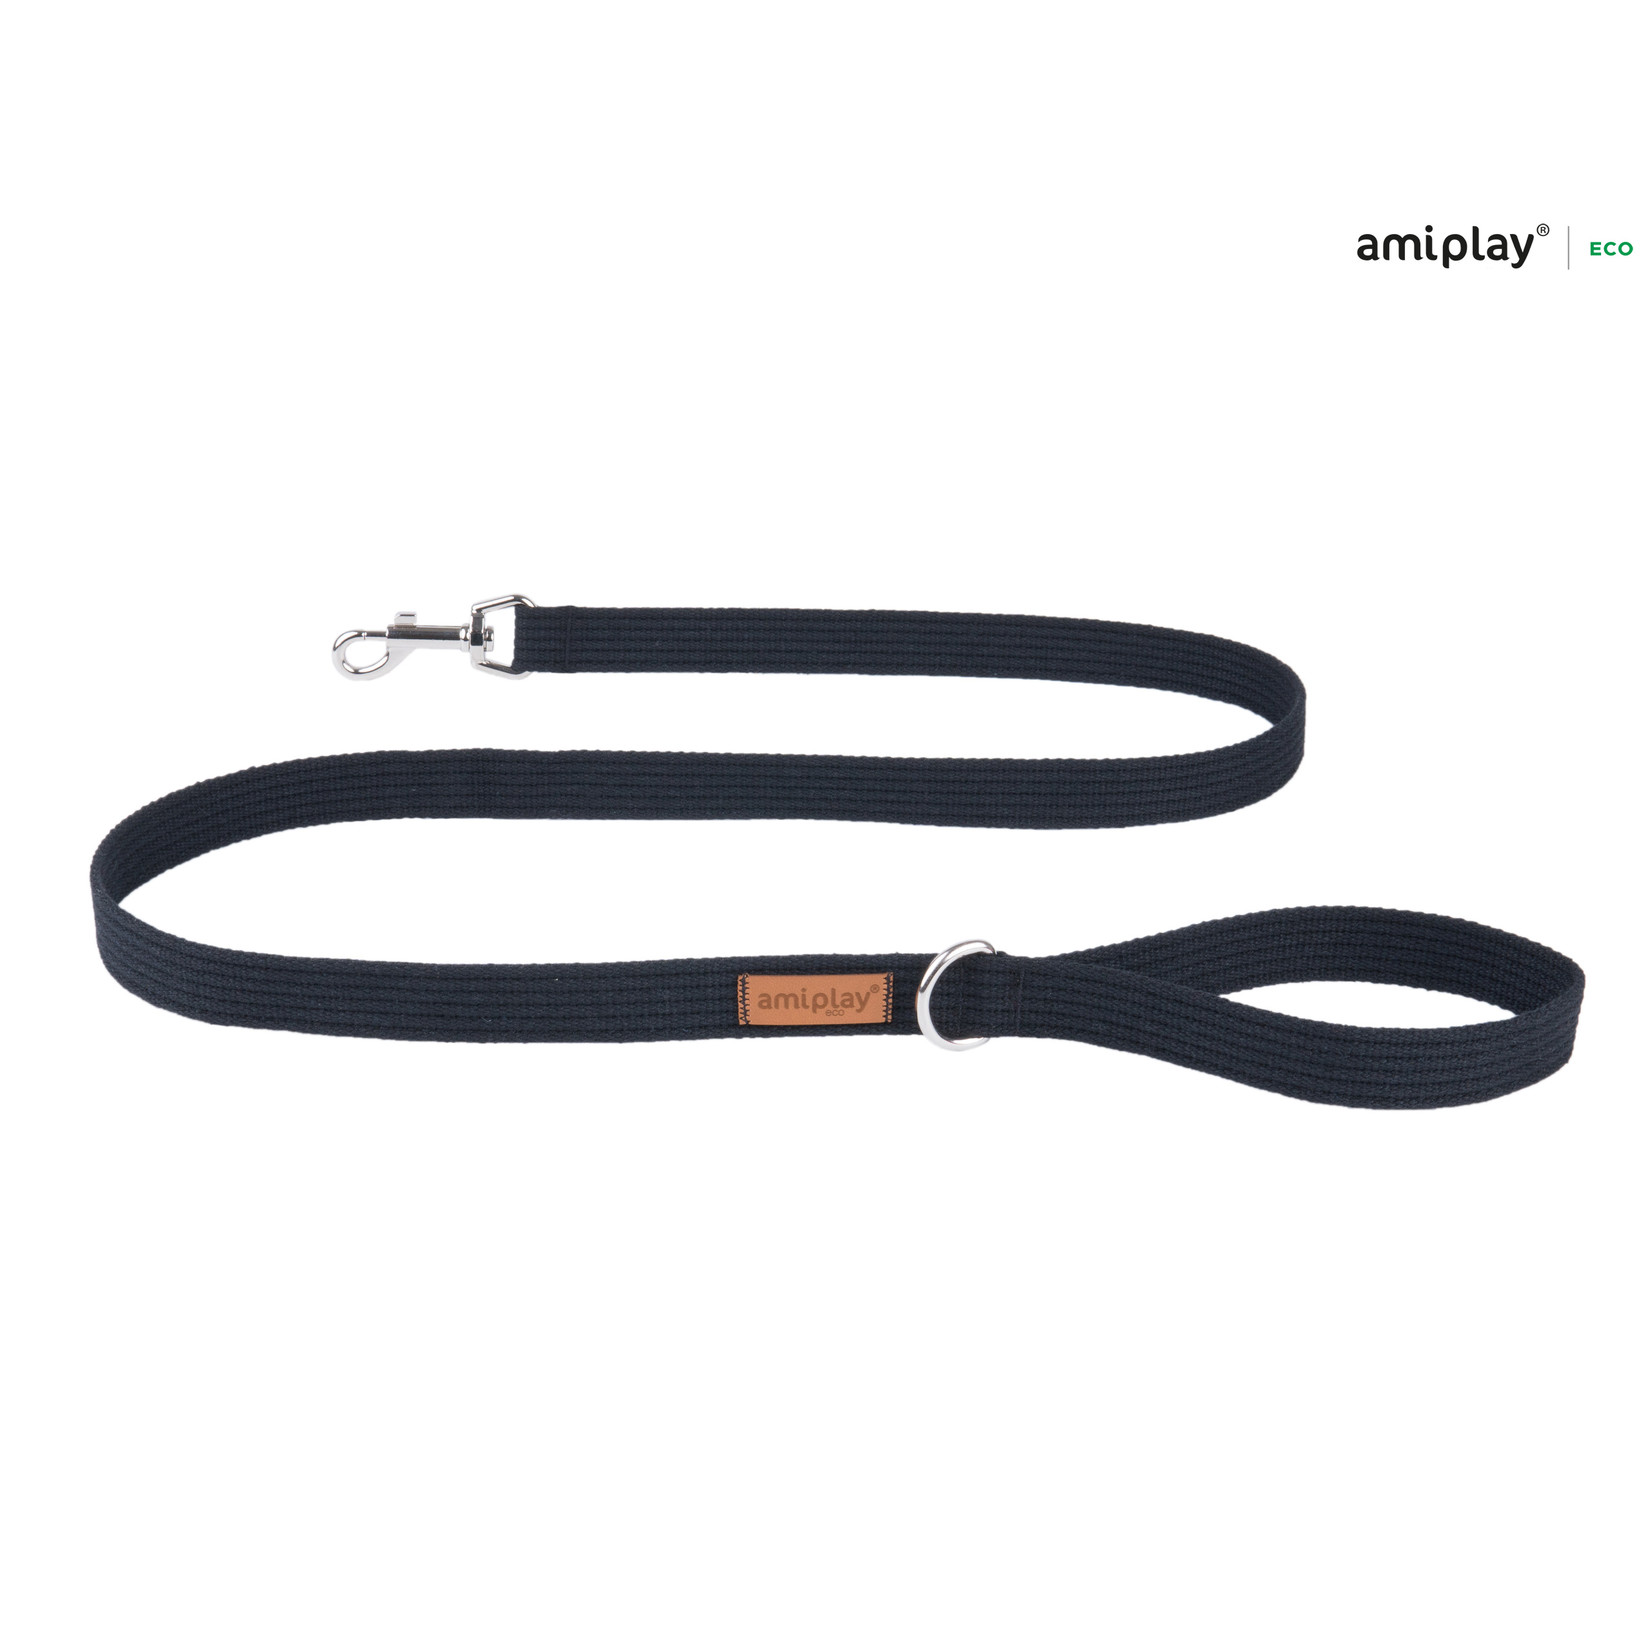 Amiplay Leiband Cotton zwart maat-S / 140x1,5cm